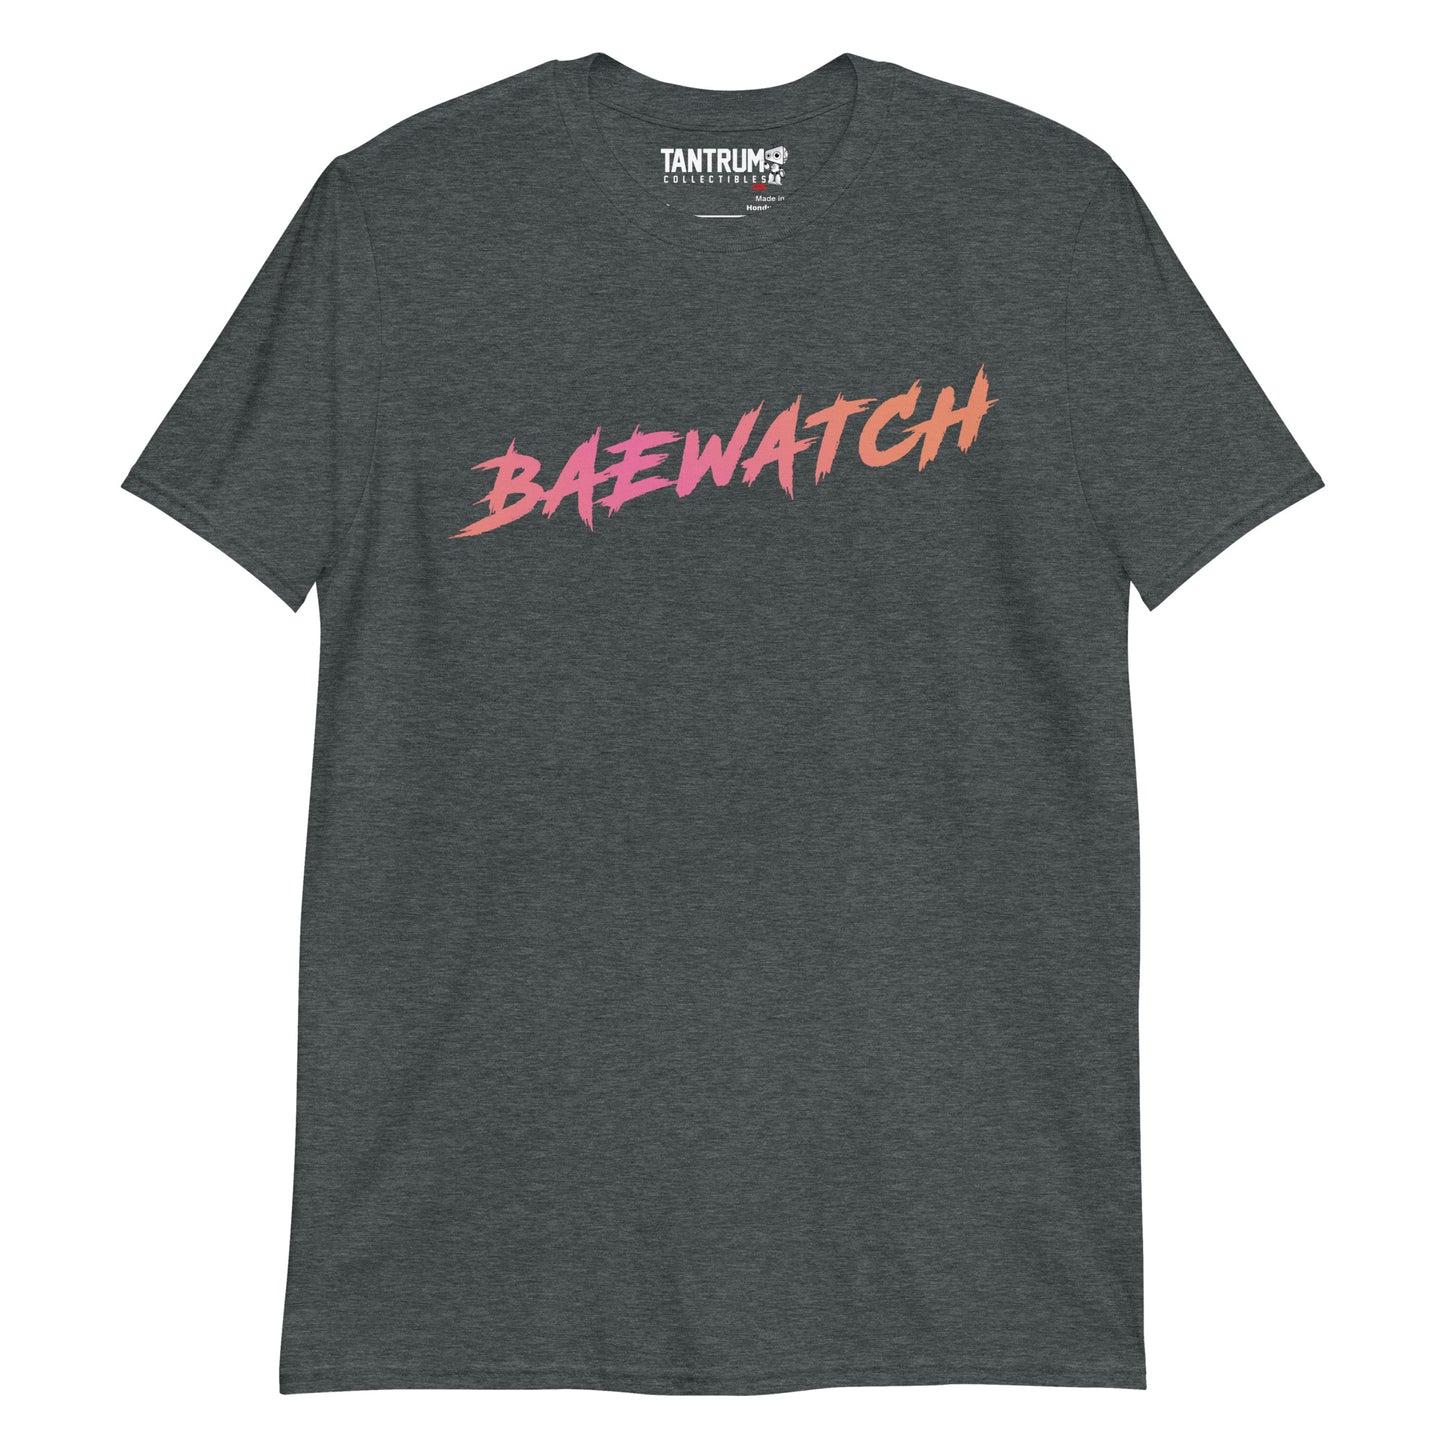 Baeginning - Unisex T-Shirt - Baewatch